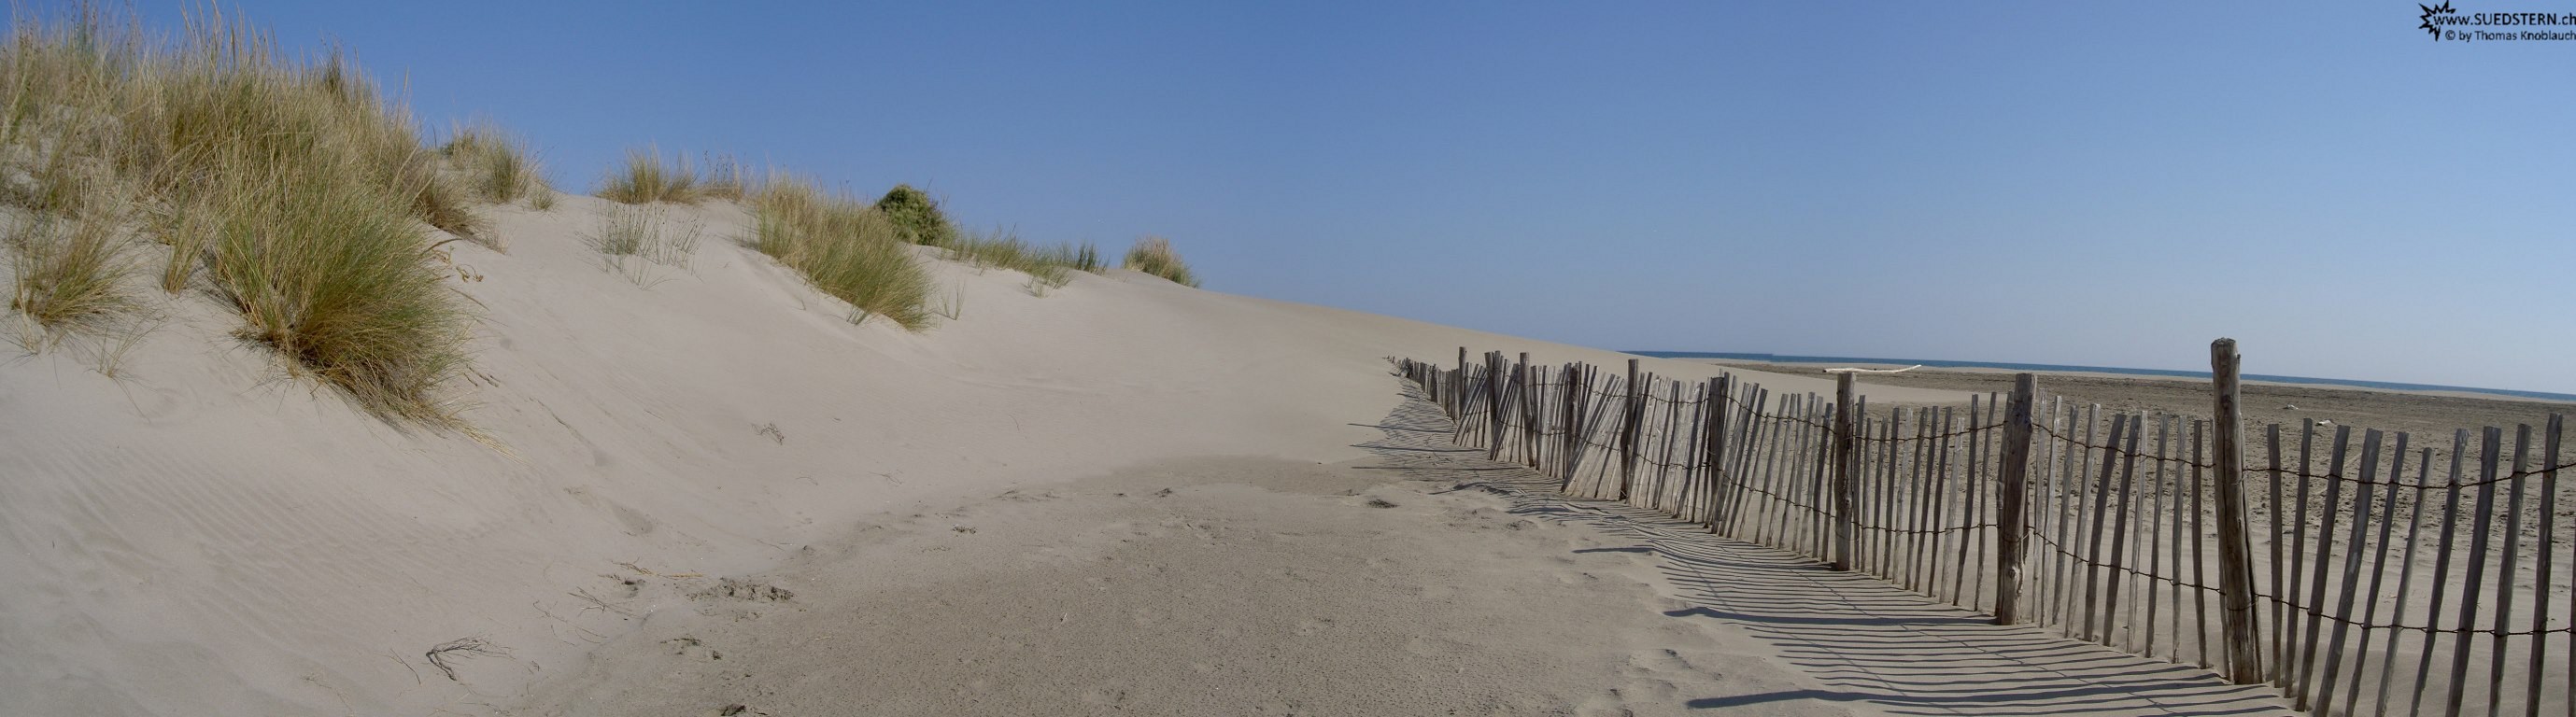 2008-08-28 - Dune and sand trap near st. maries de la mer, france